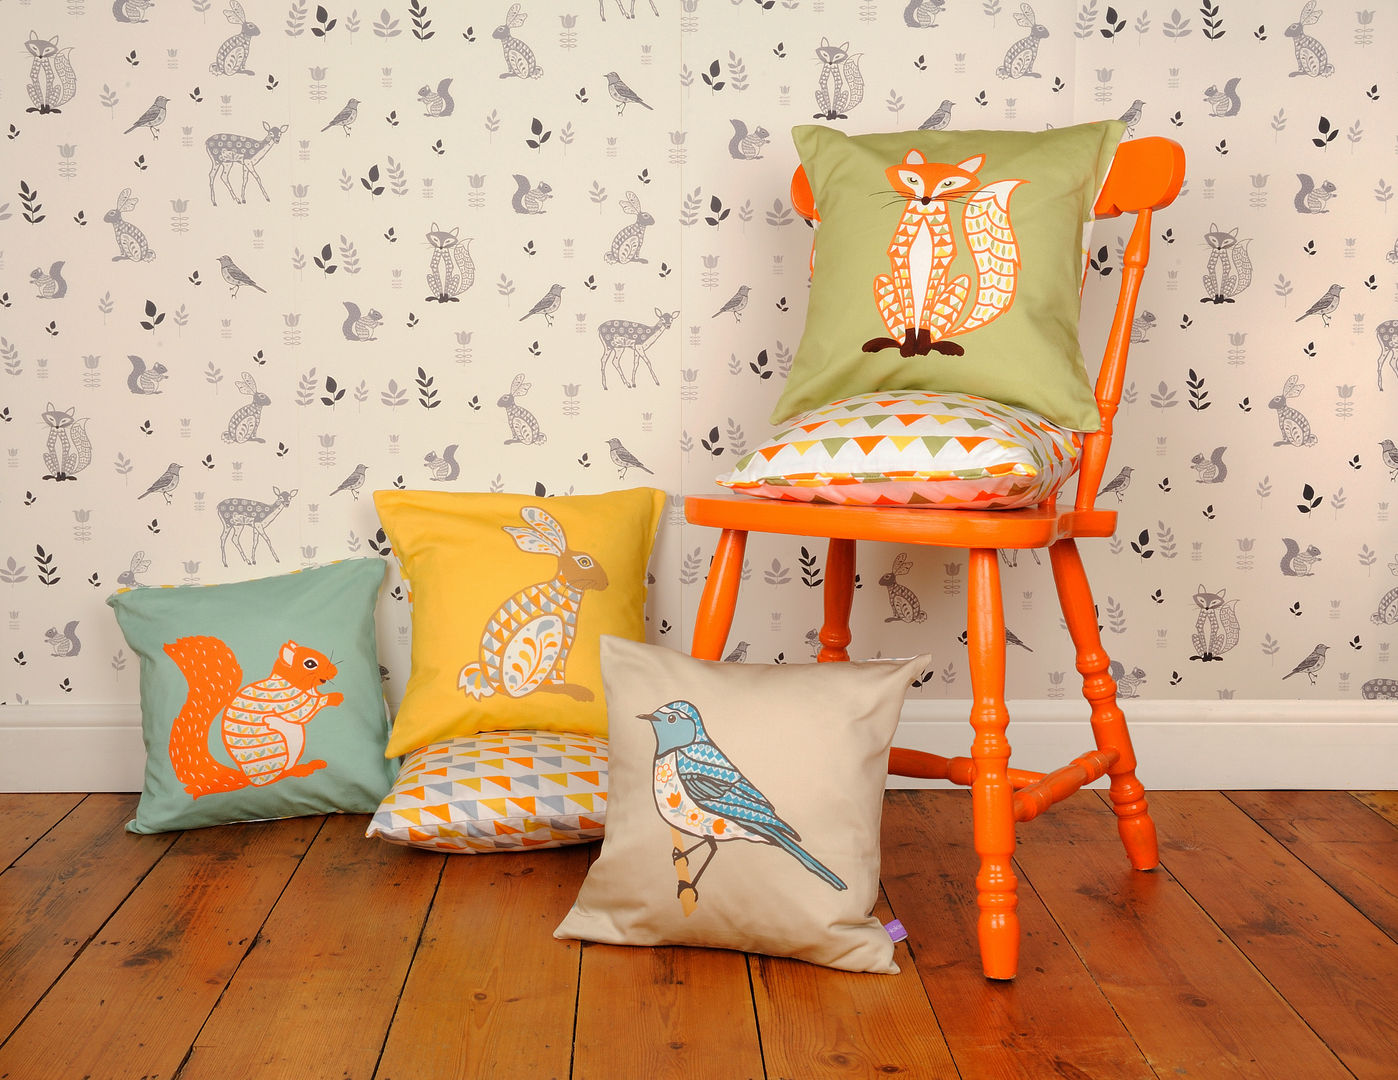 Decorative Animal Cushions and Wallpaper Helen Gordon Habitaciones de estilo escandinavo Textiles